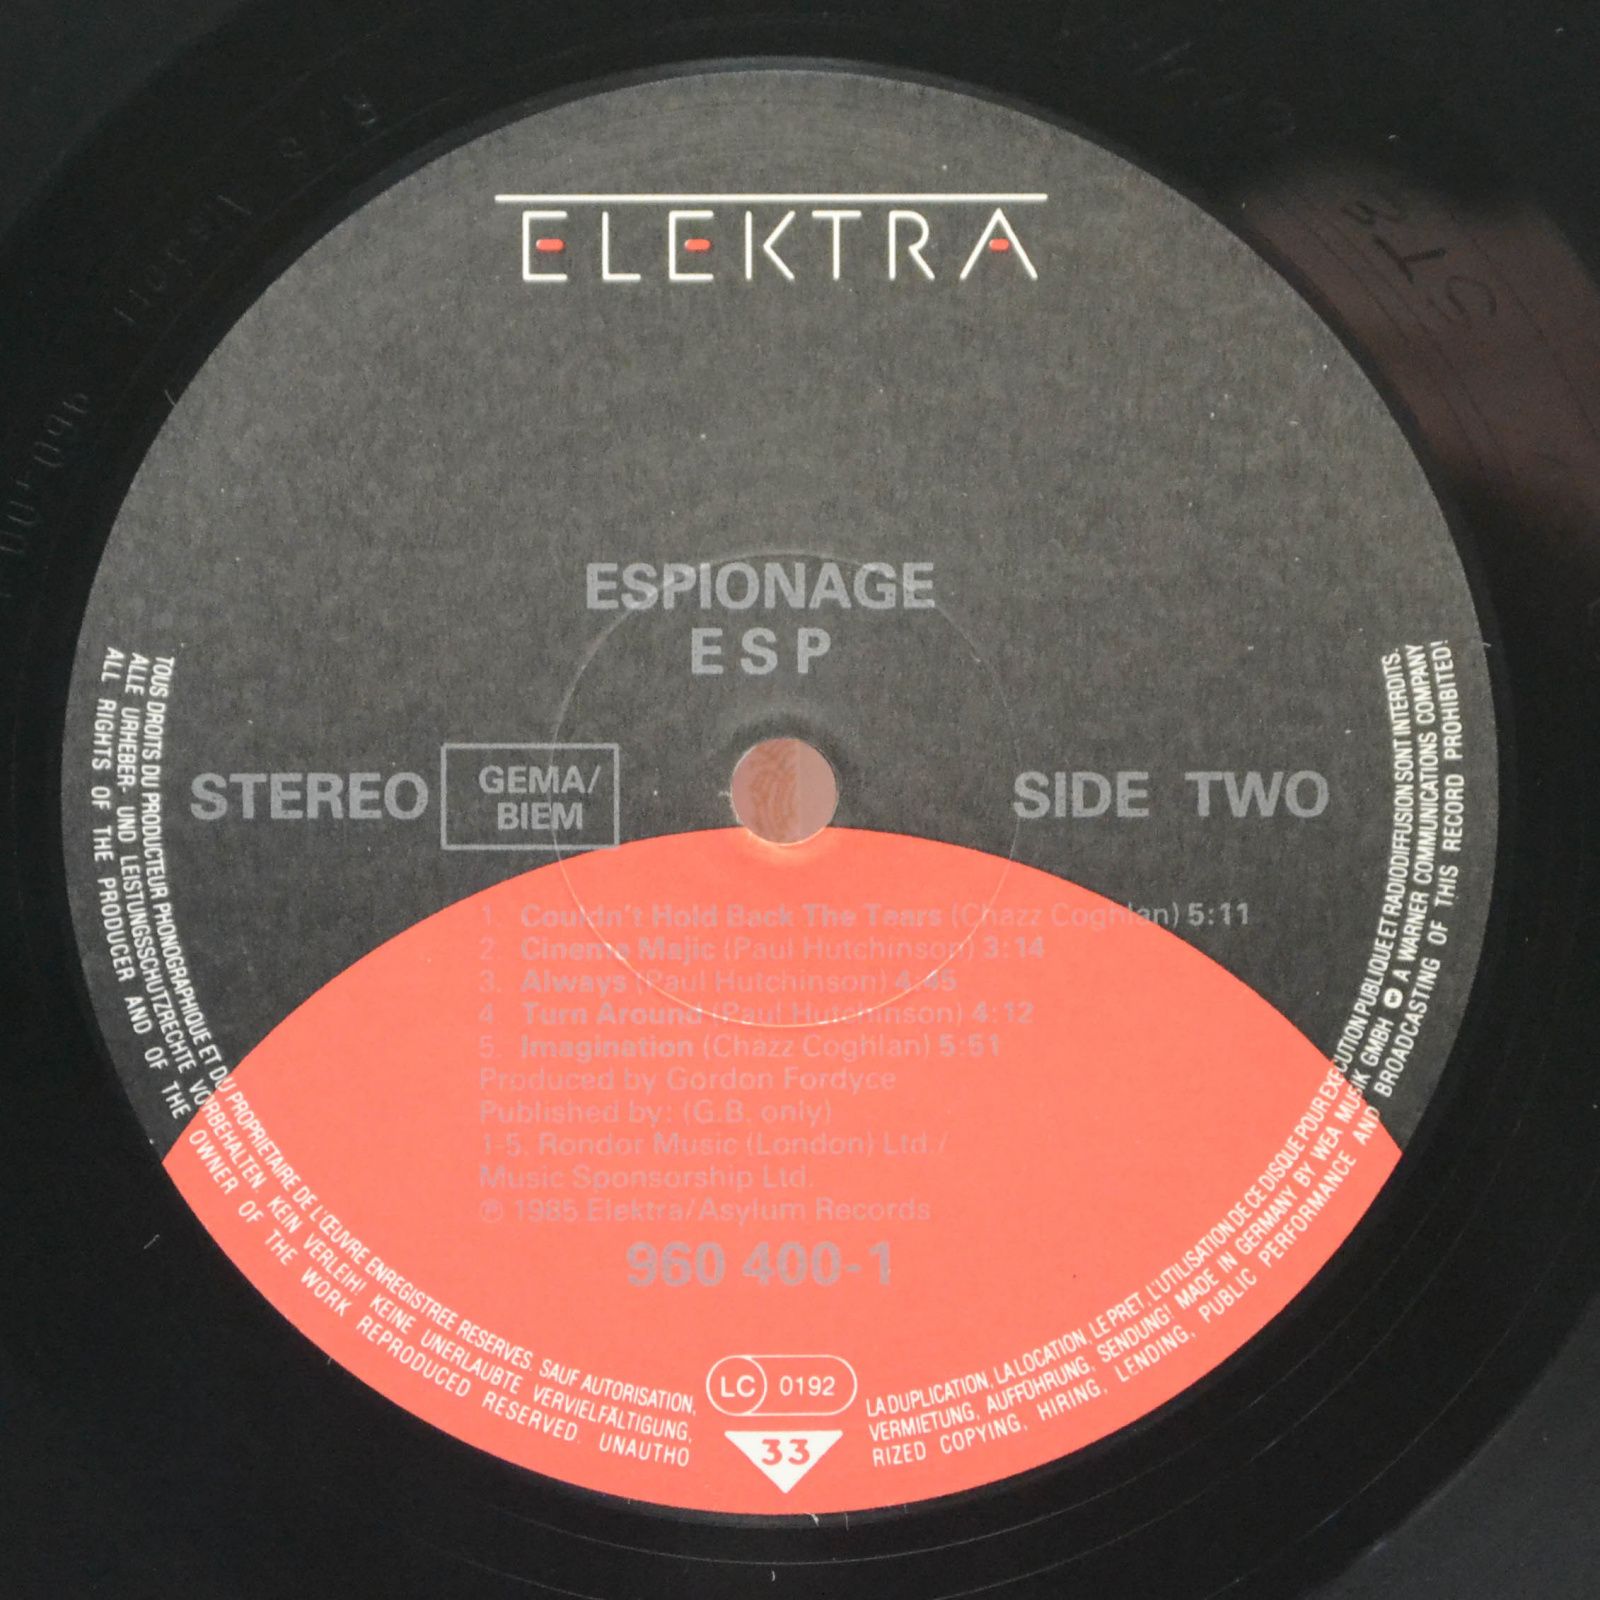 Espionage — E S P, 1985